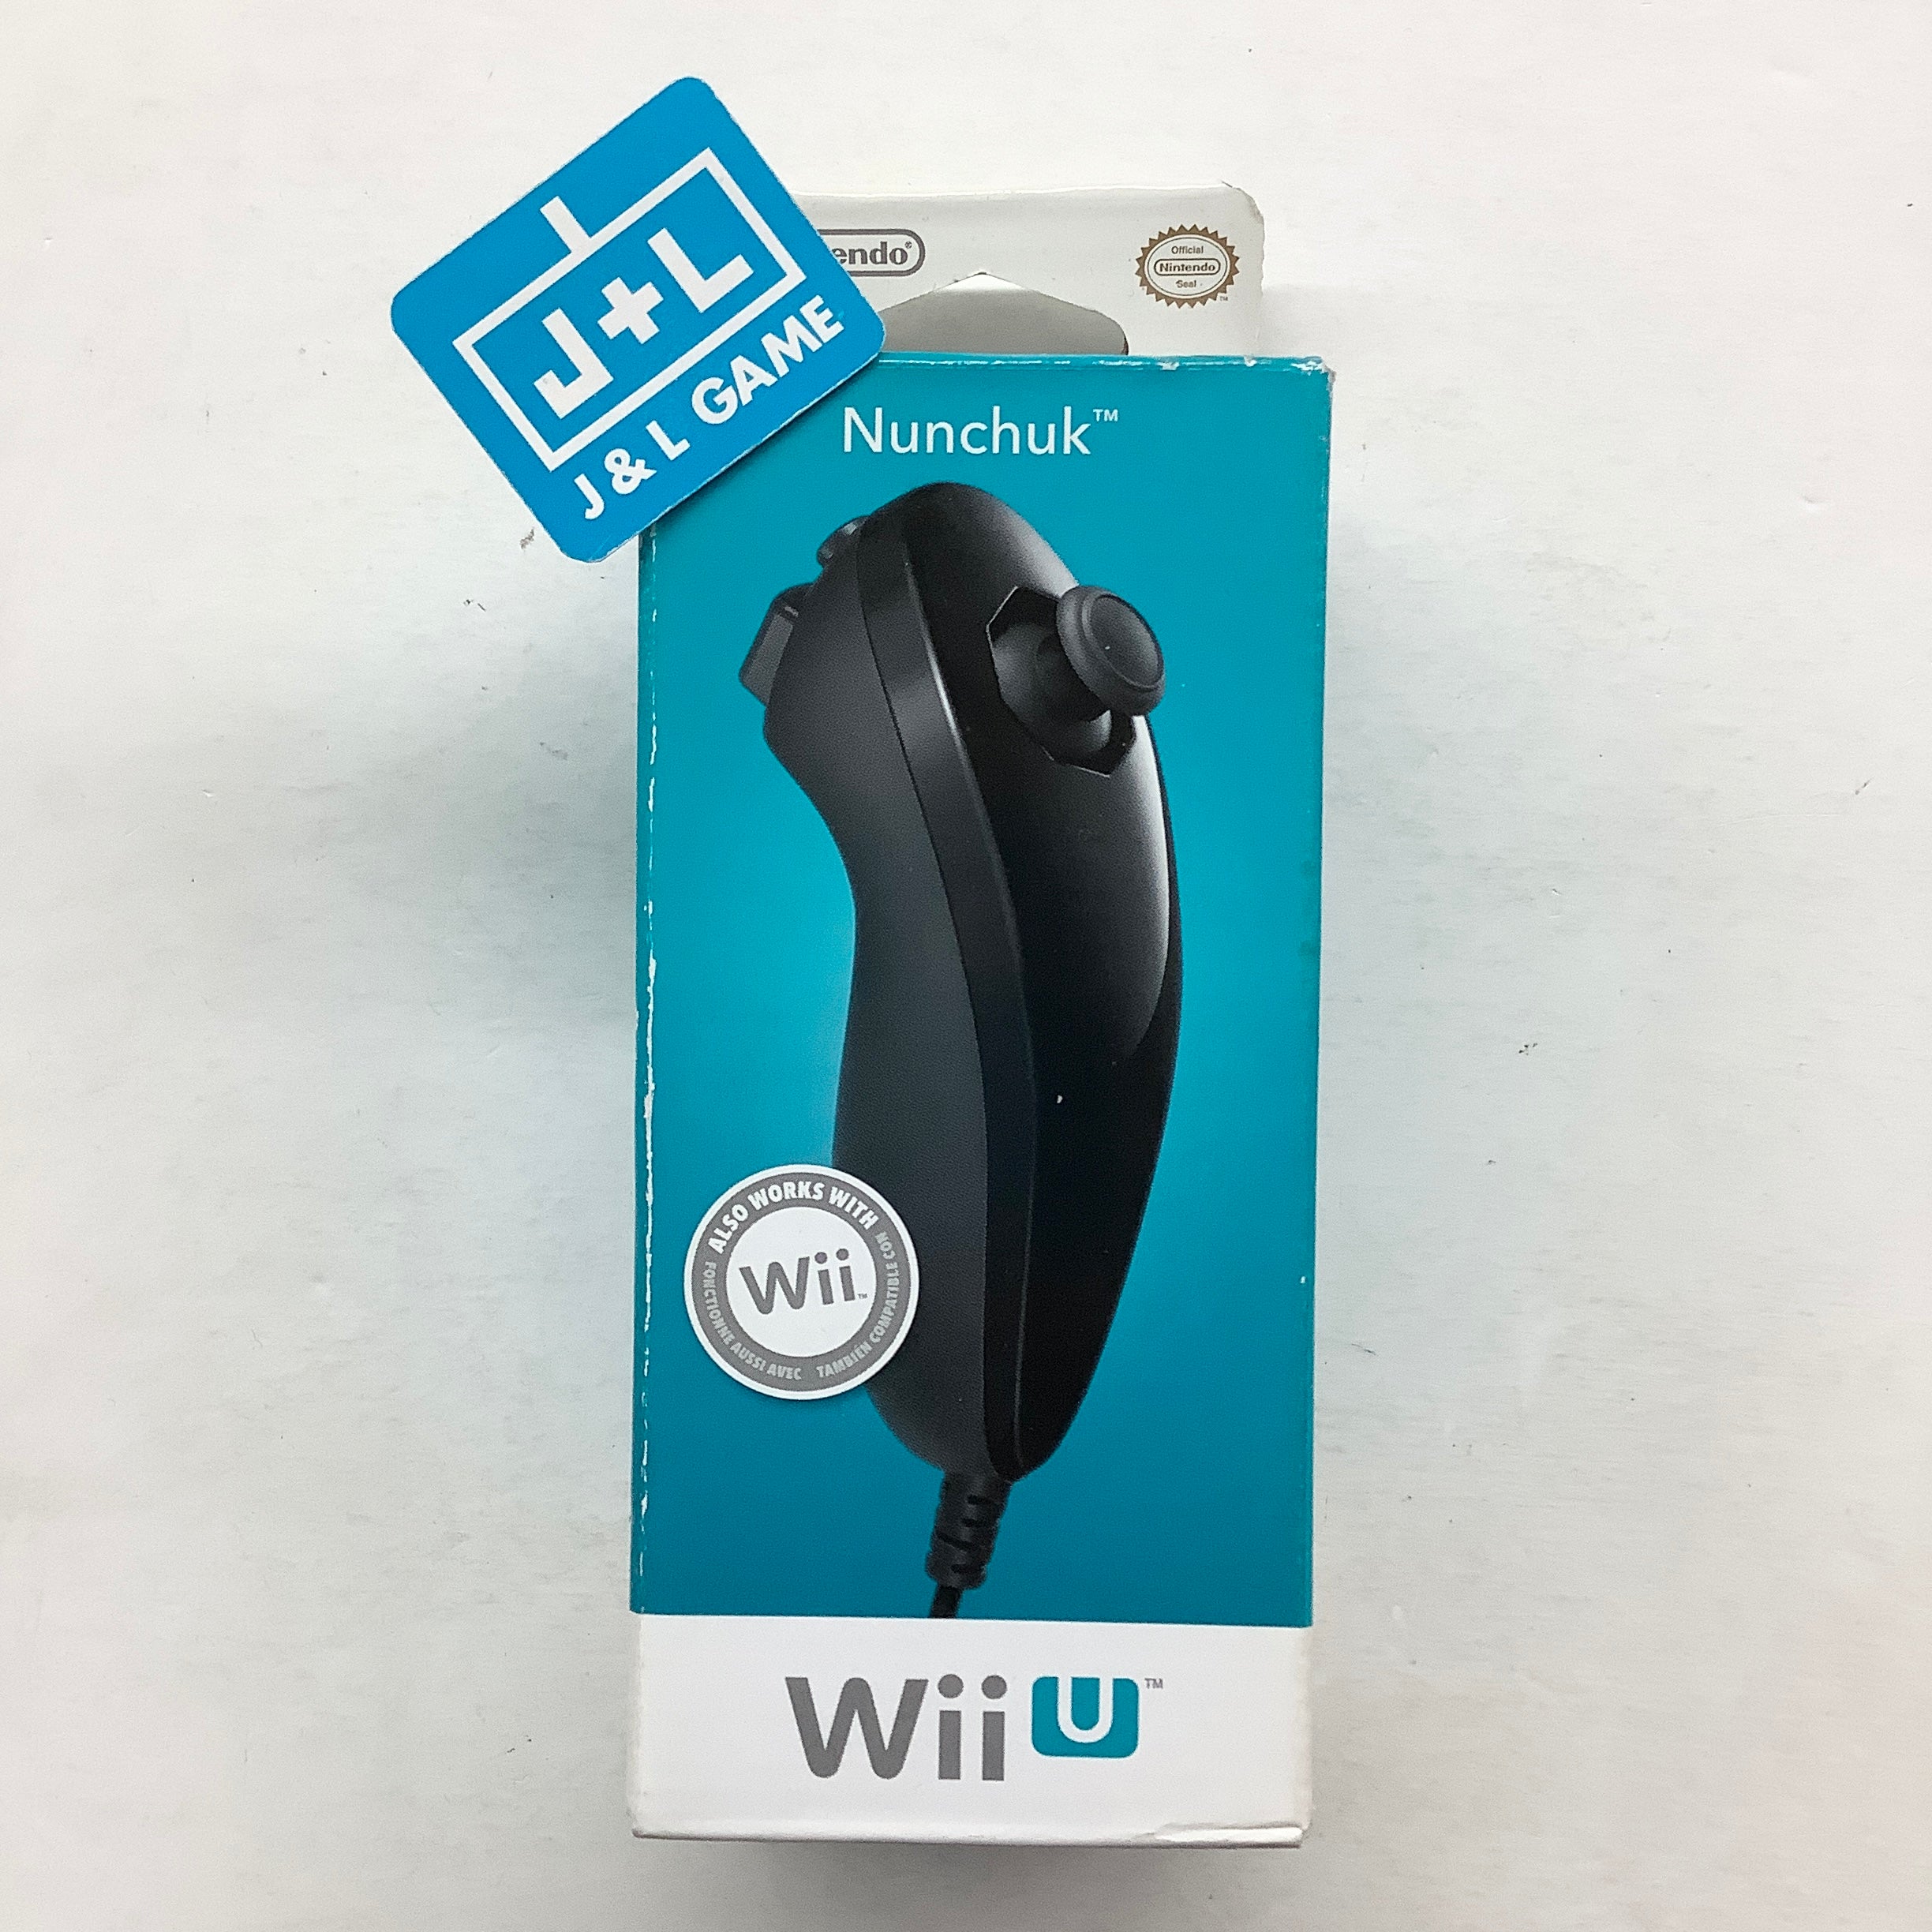 Nintendo Wii U NunChuck Controller (Black) - Nintendo Wii U Accessories Nintendo   